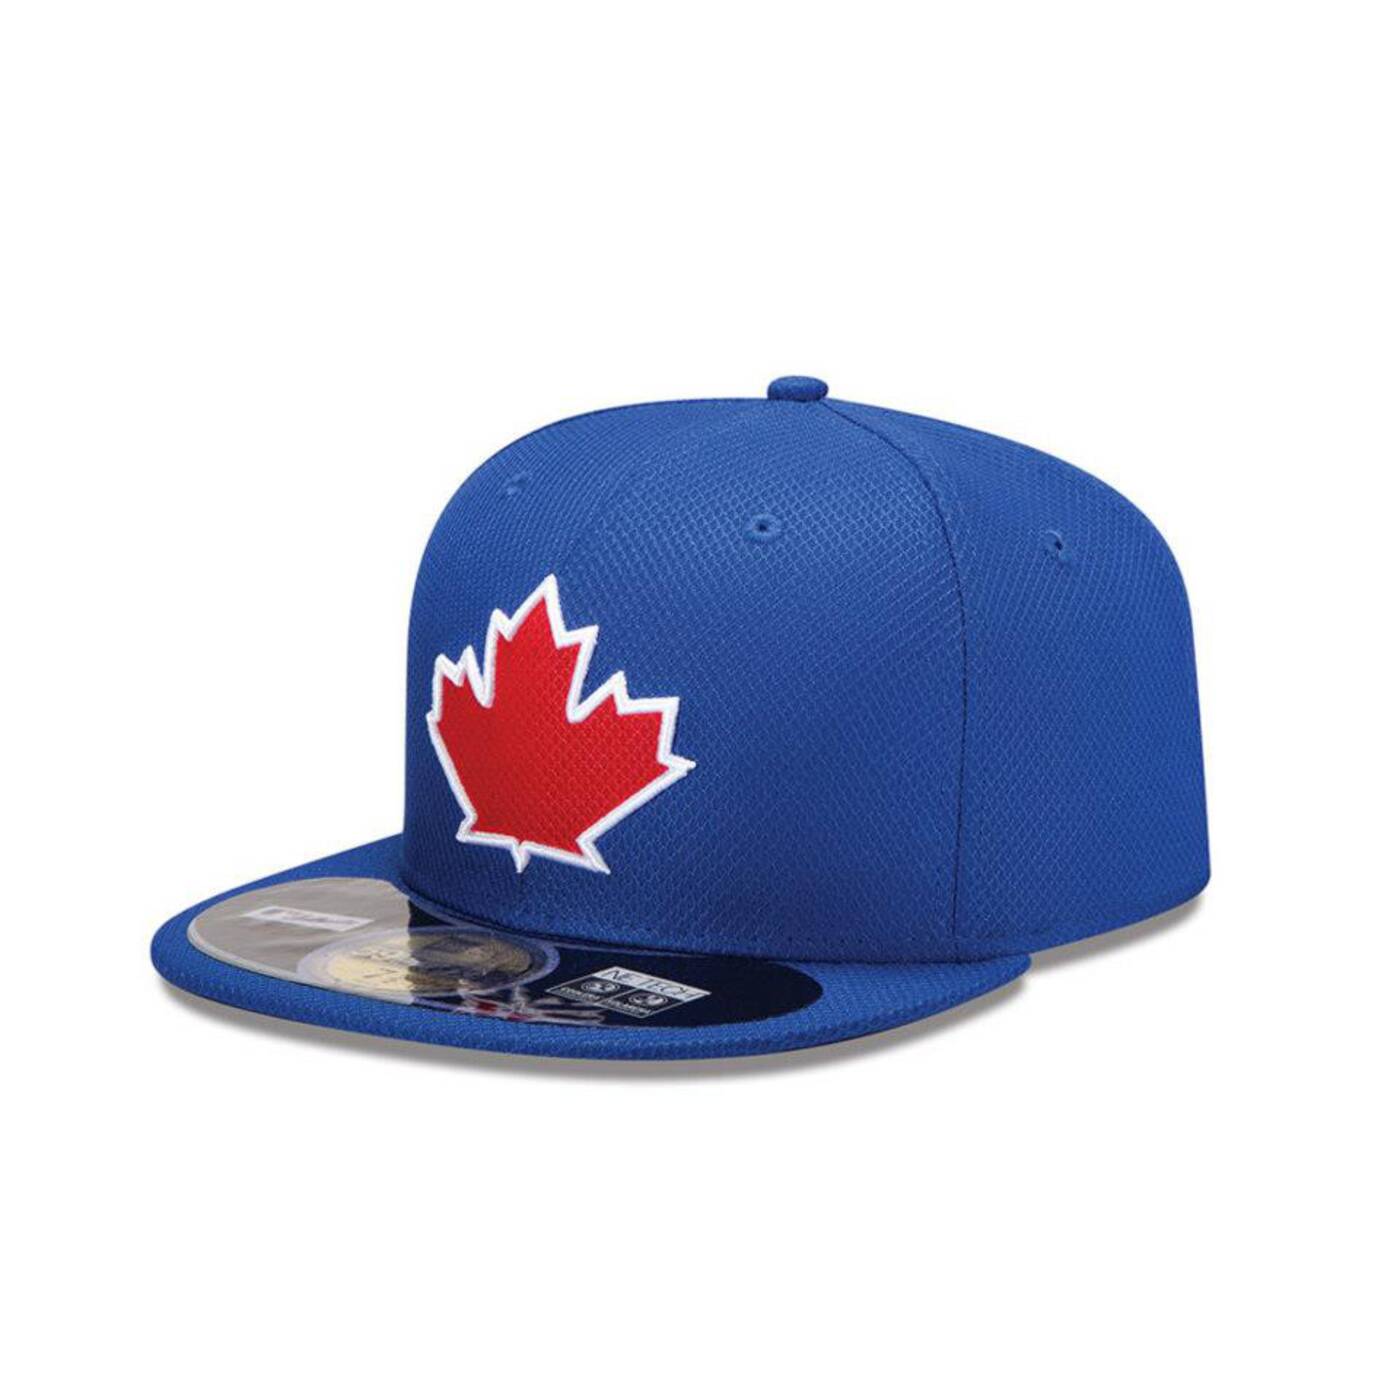 Toronto Blue Jays Merchandise, Jerseys, Apparel, Clothing